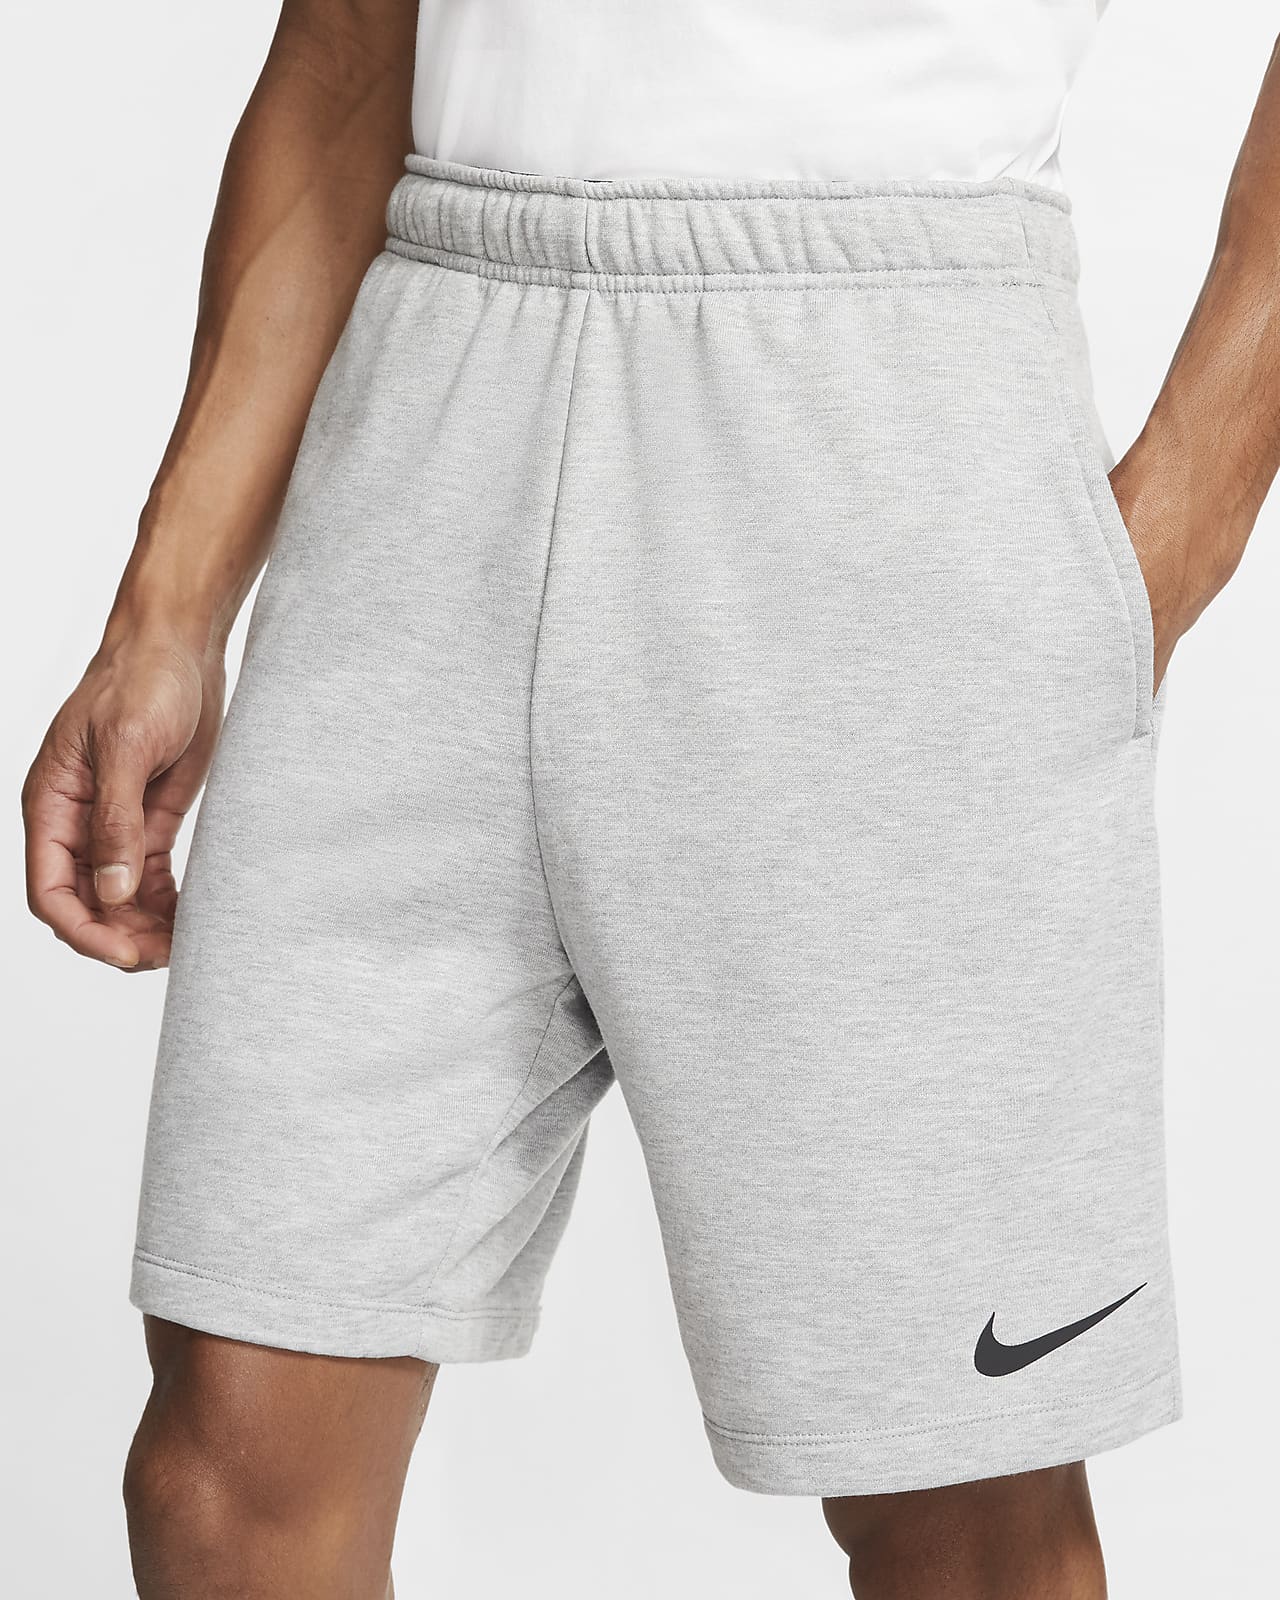 Шорты Nike Dri Fit мужские. Shorts Nike Fleece. Давай short